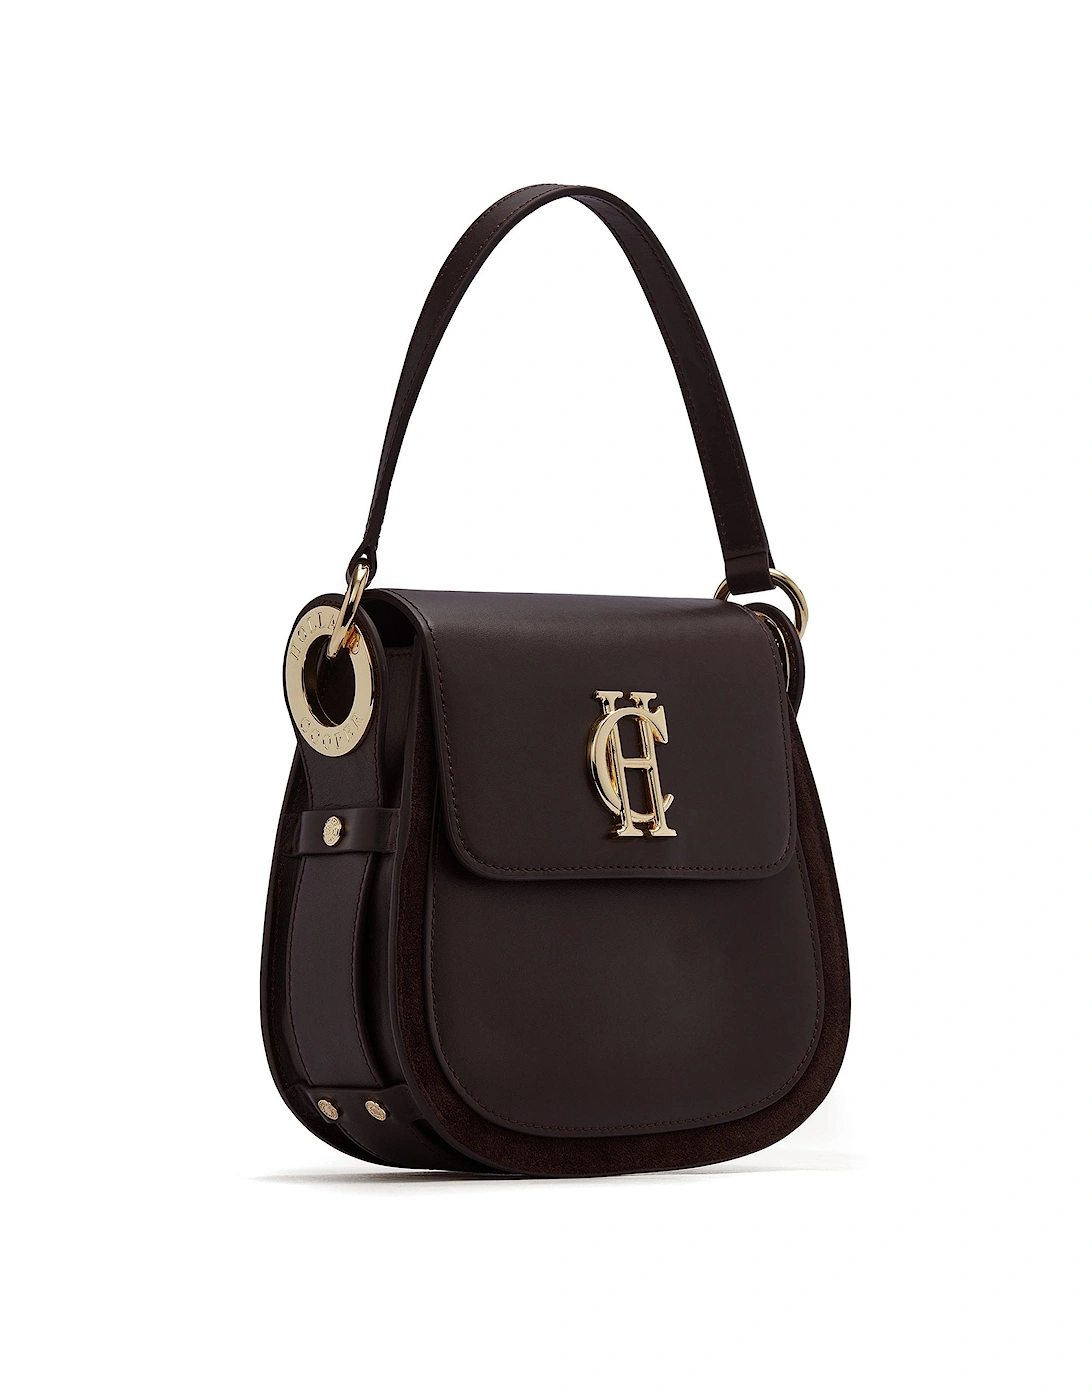 Chelsea Brown Saddle Bag